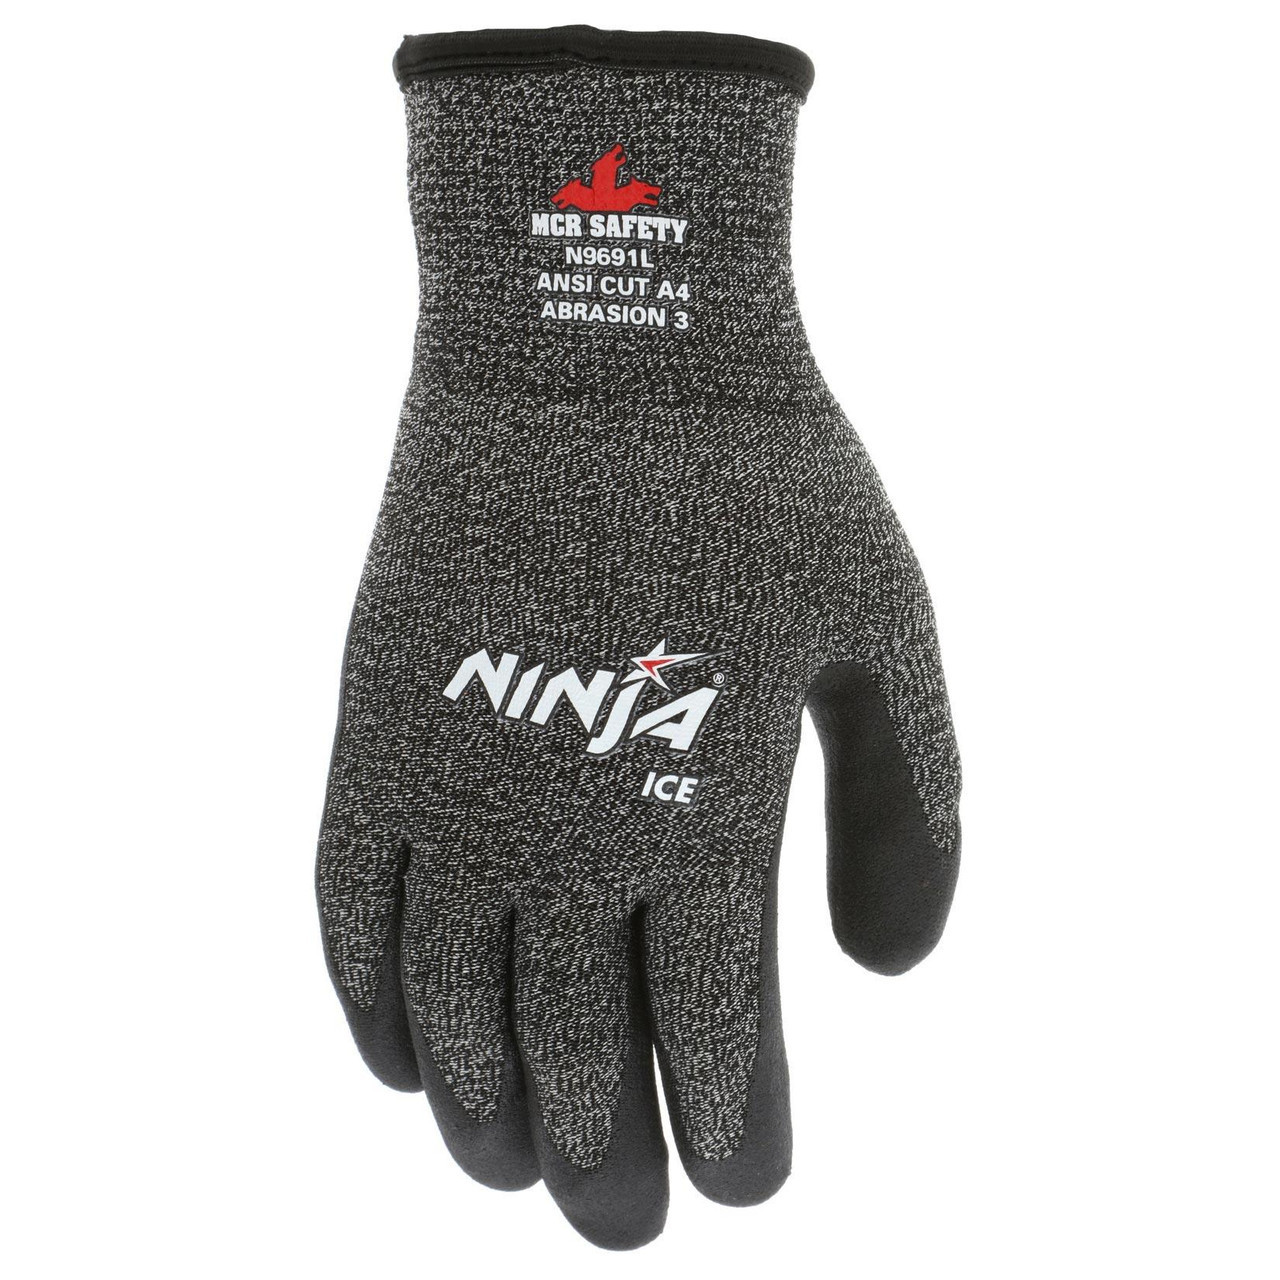 MCR Ninja Ice Cut A4 Liner Winter Work Gloves [S-XXL] - N9691 - Pair